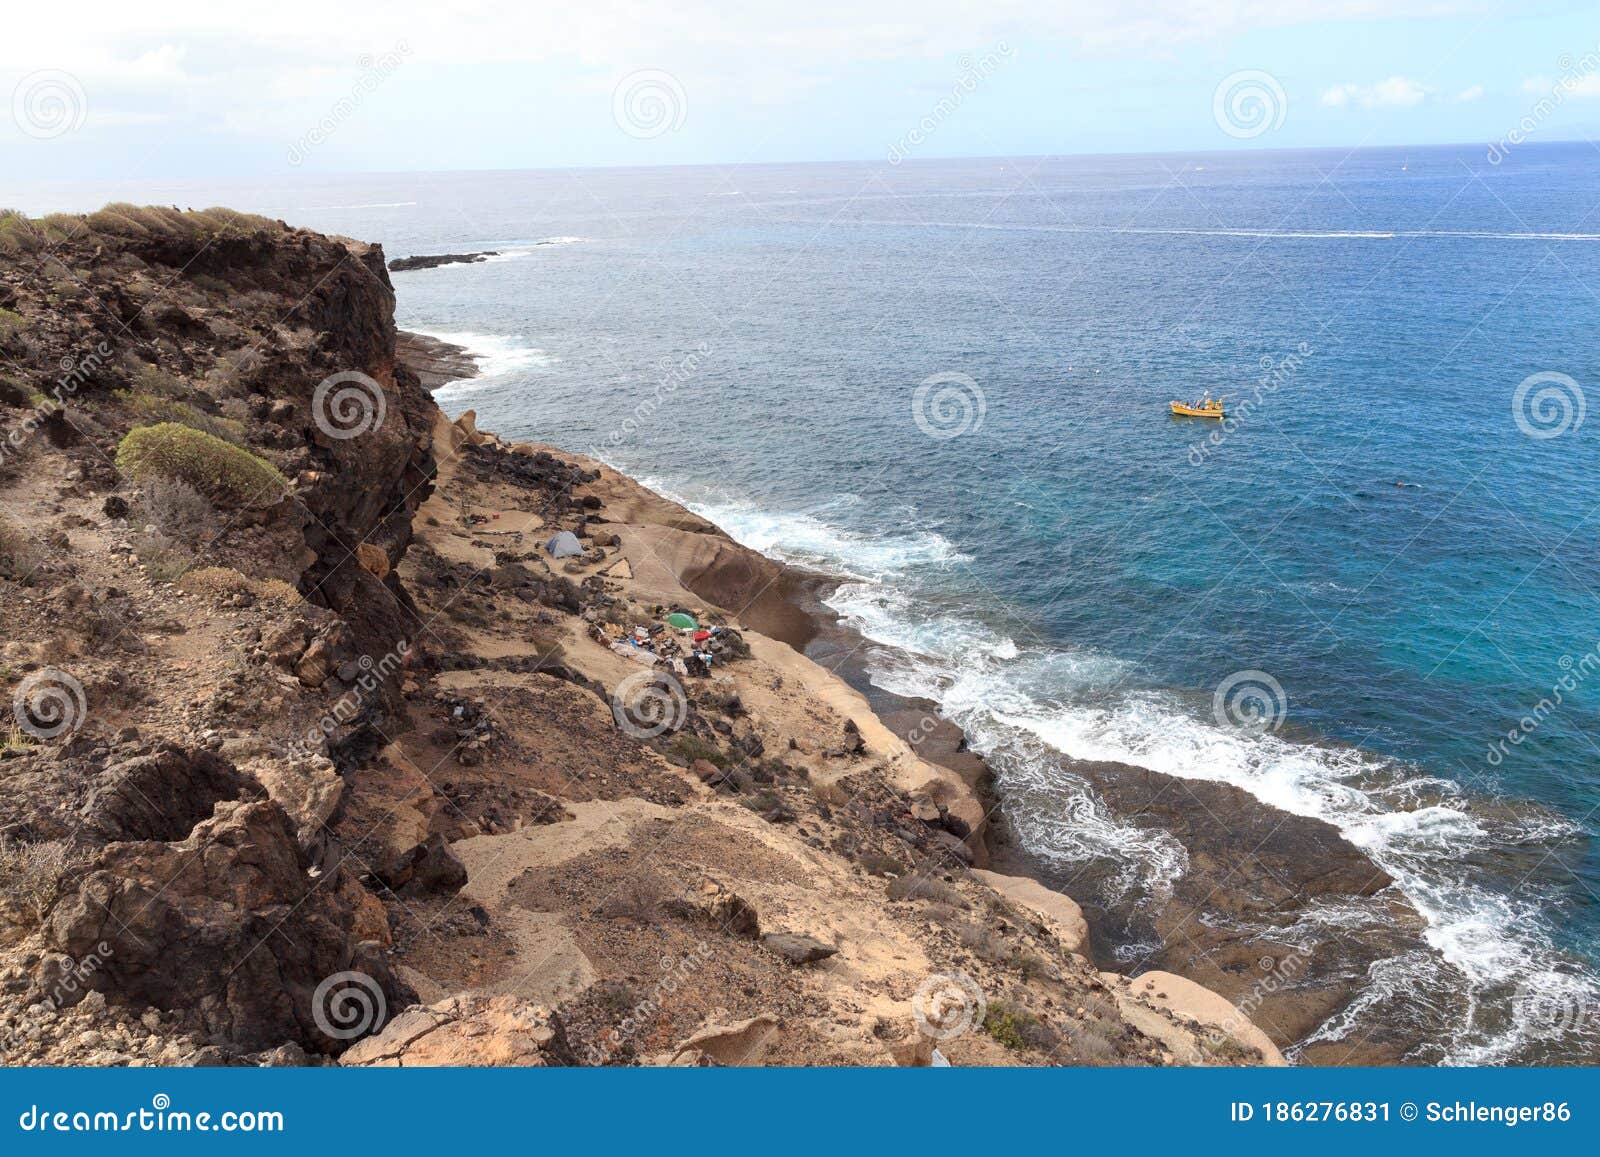 coastline with cliffs at beach playa de los morteros on canary island tenerife, spain